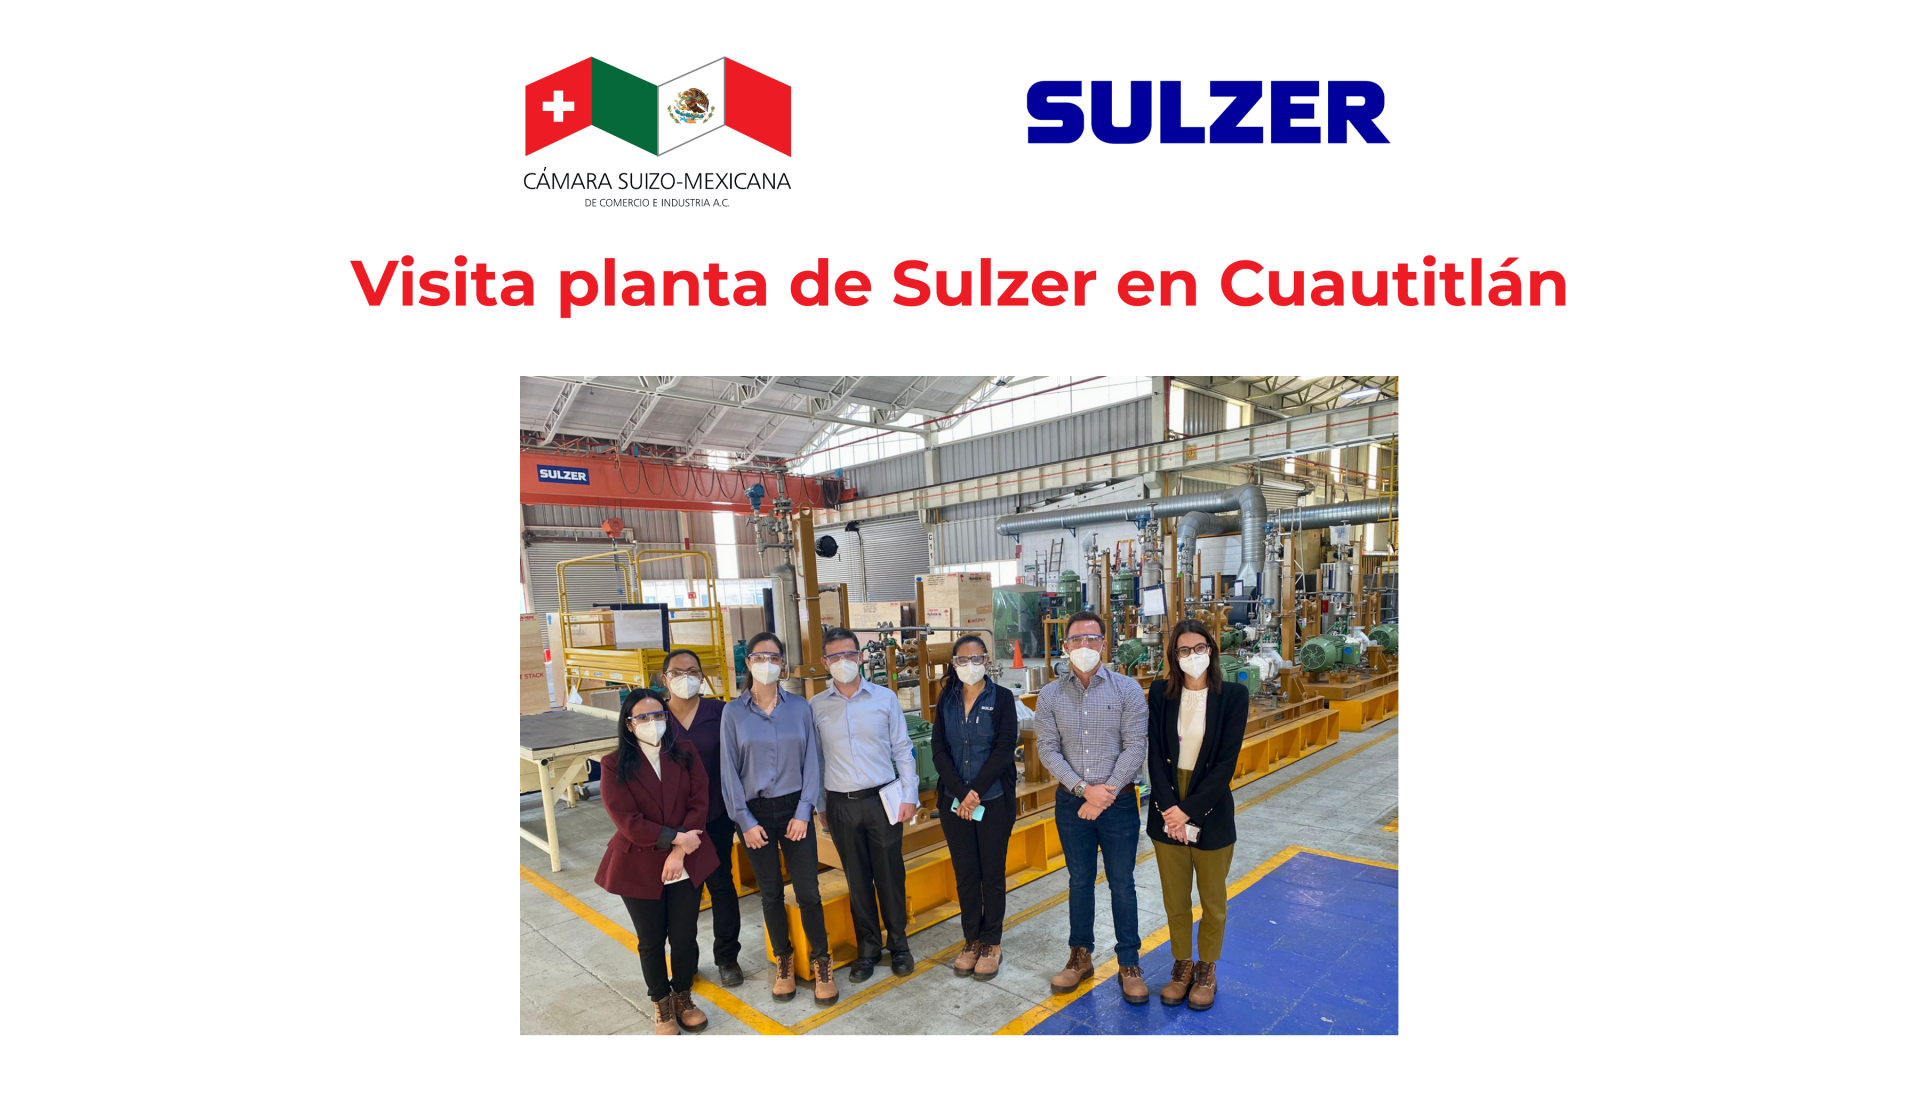 Visit to Sulzer’s plant